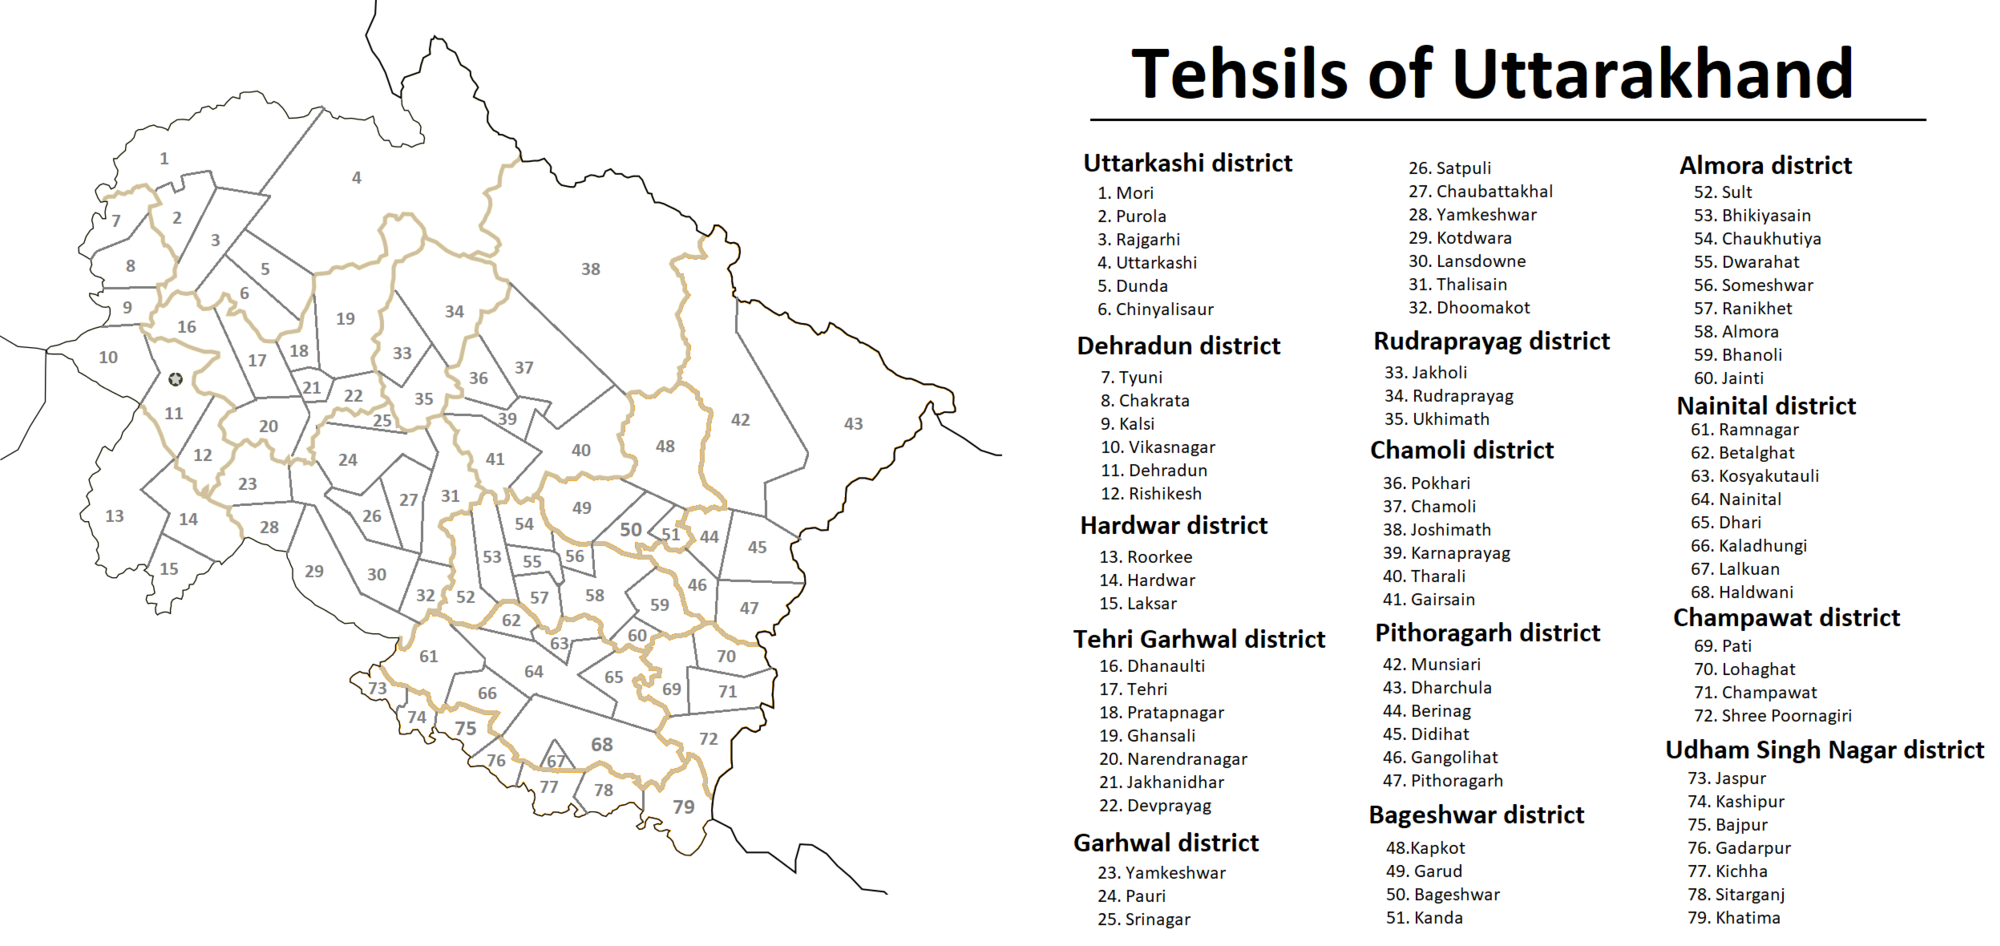 Tehsils of Uttarakhand (Schematic).png